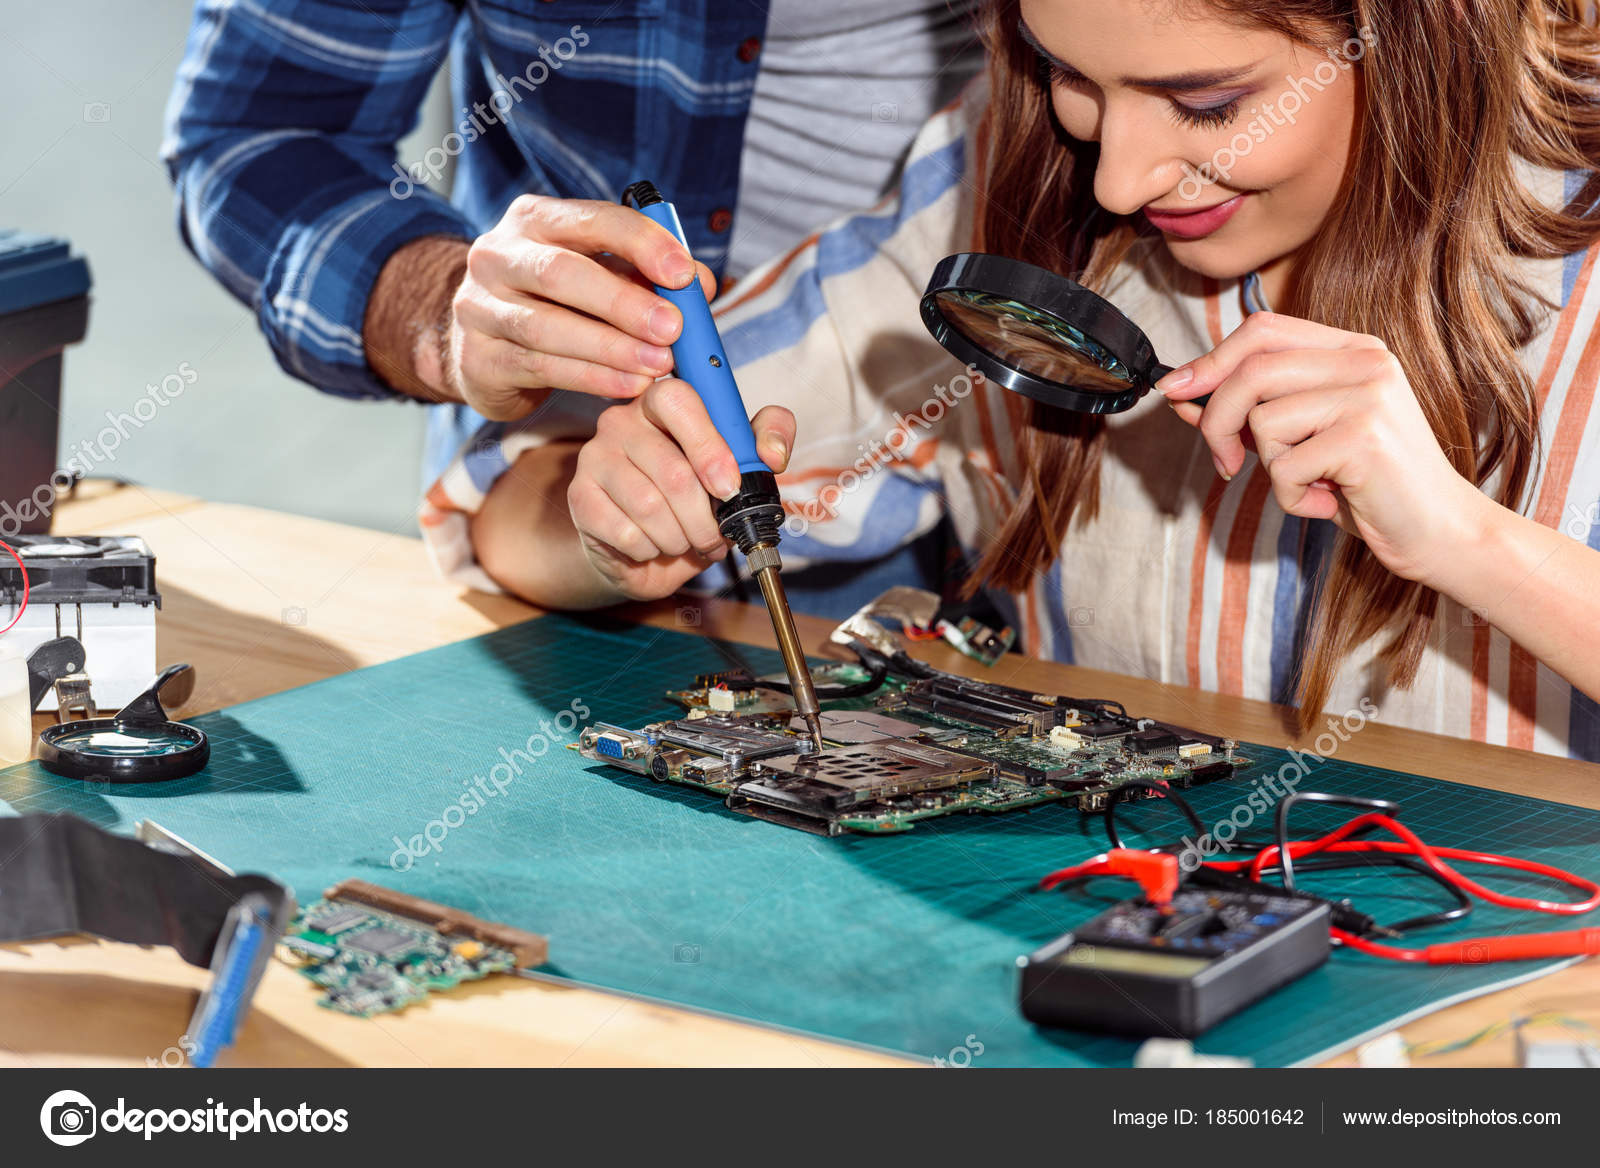 depositphotos_185001642-stock-photo-man-helping-woman-soldering-elements.jpg